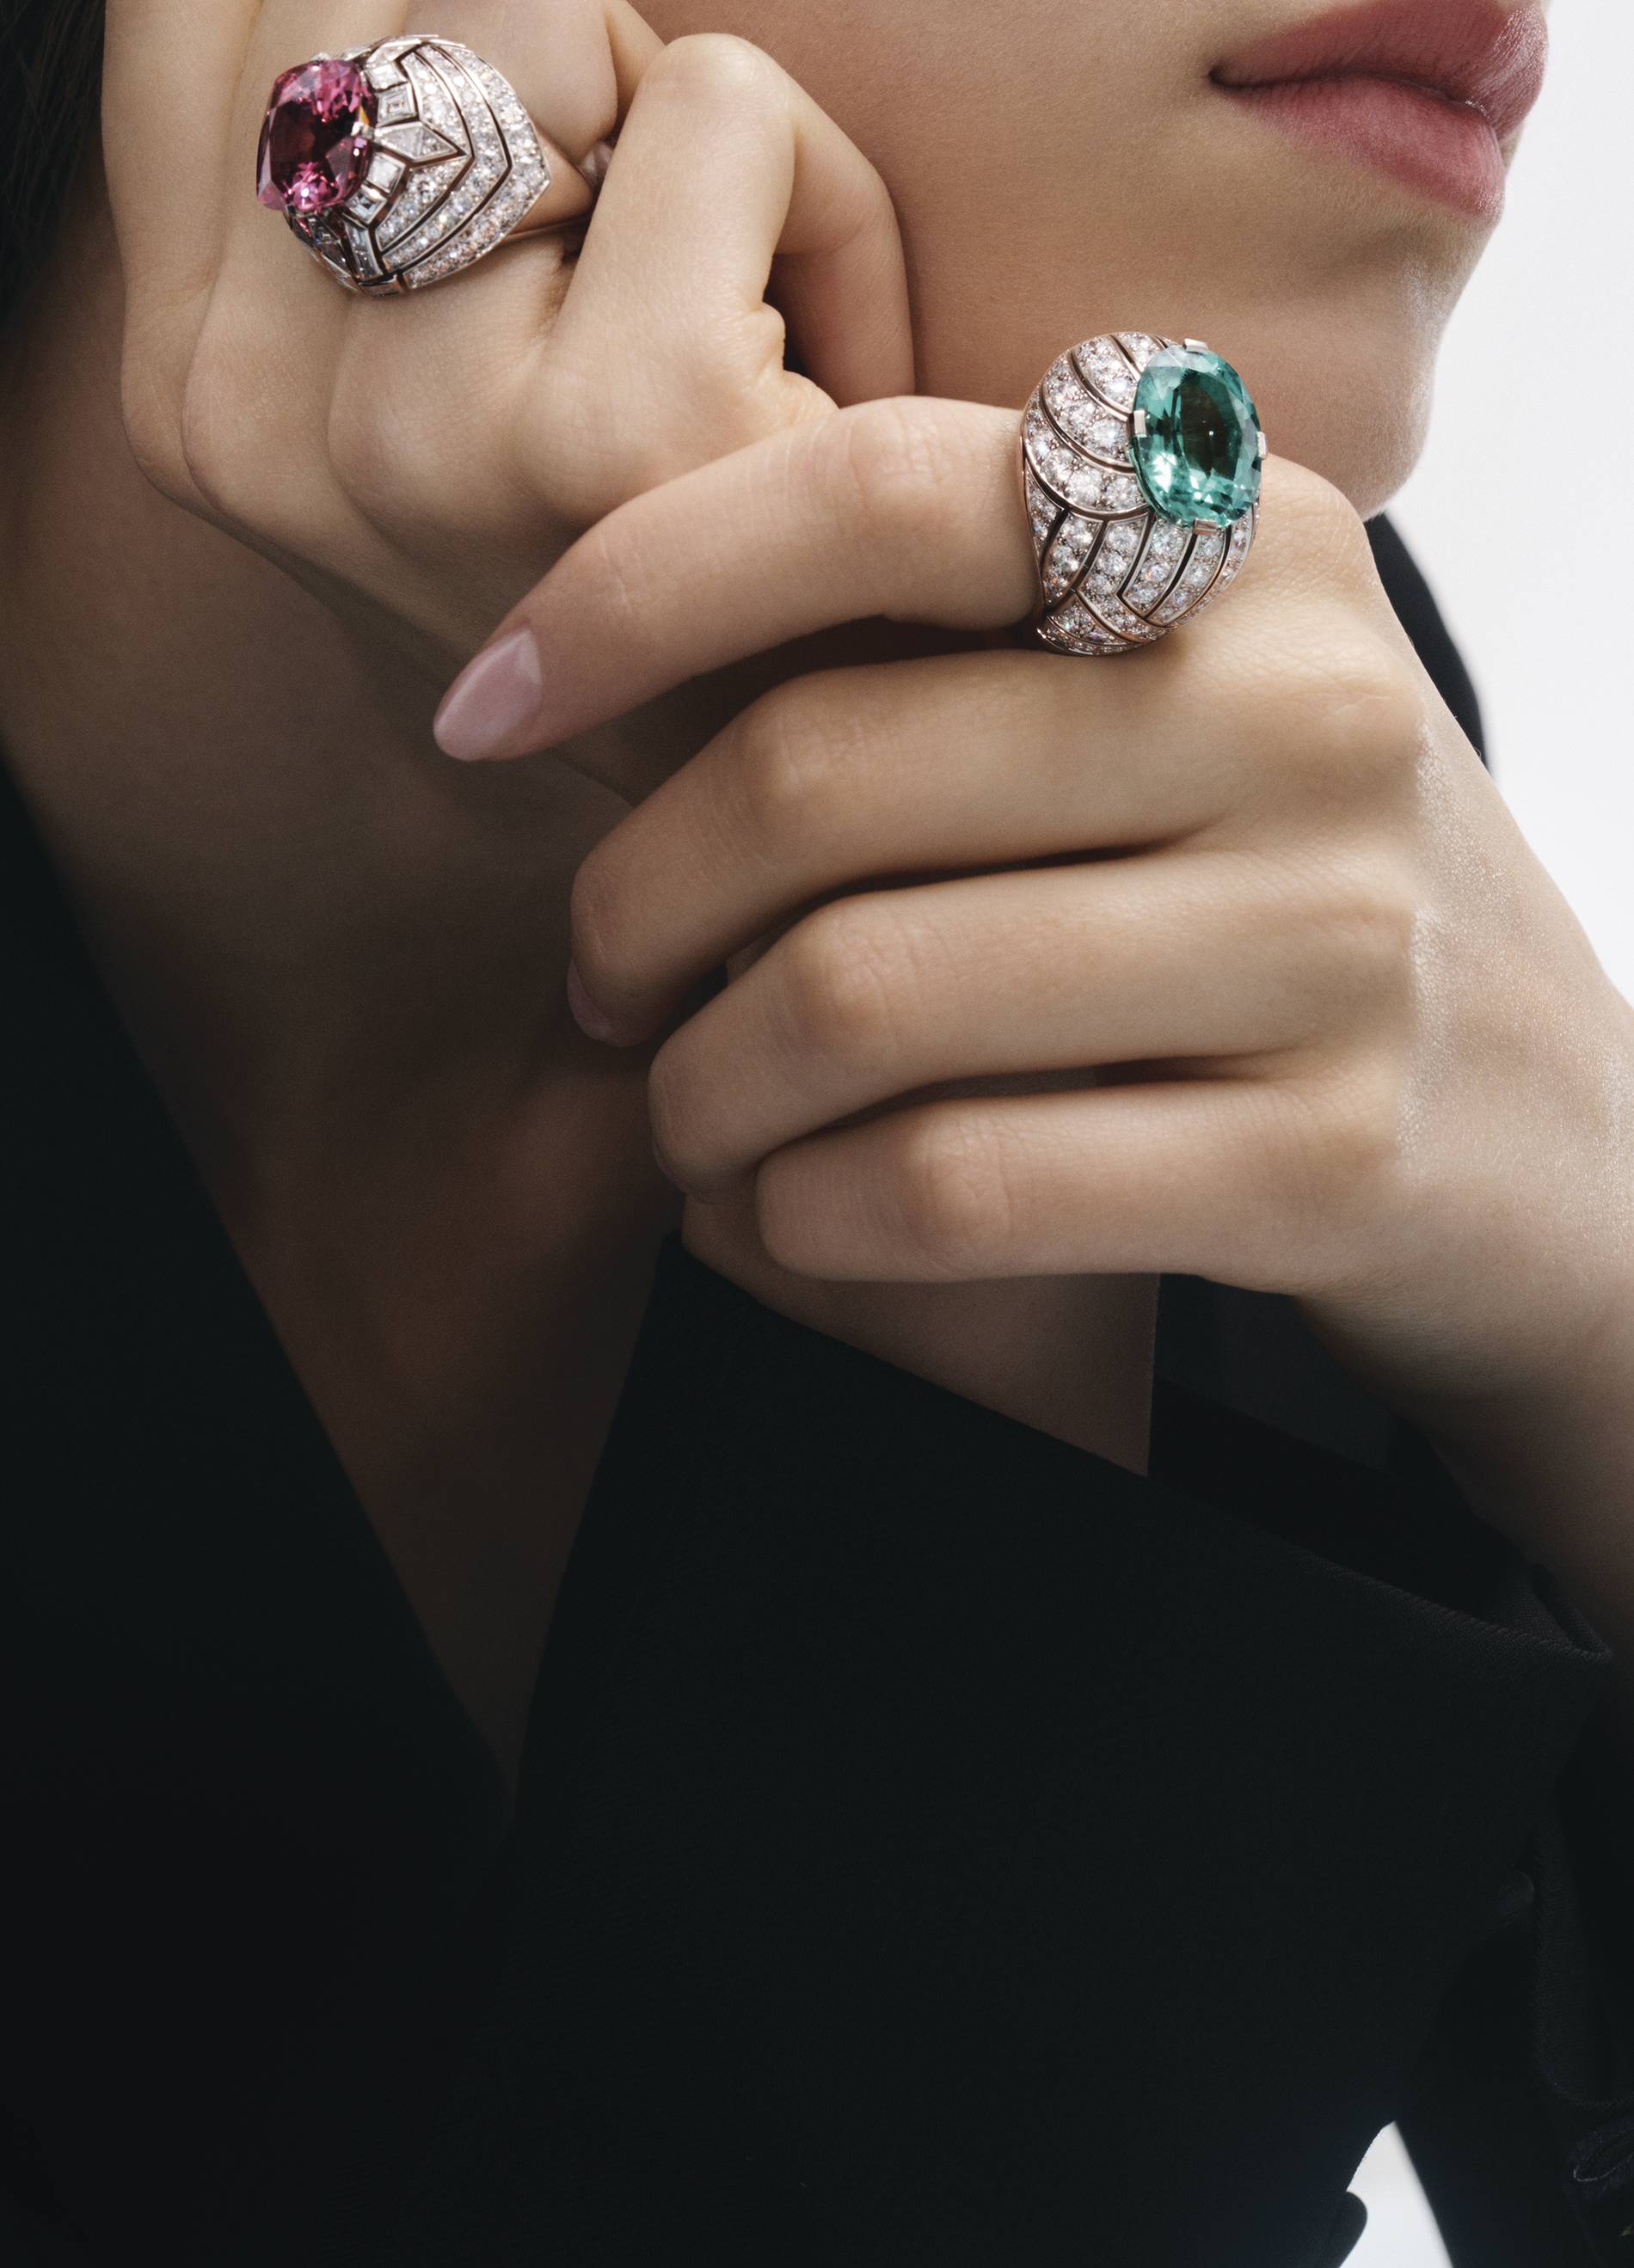 Louis Vuitton's lemon-sized diamond is a major jewellery event